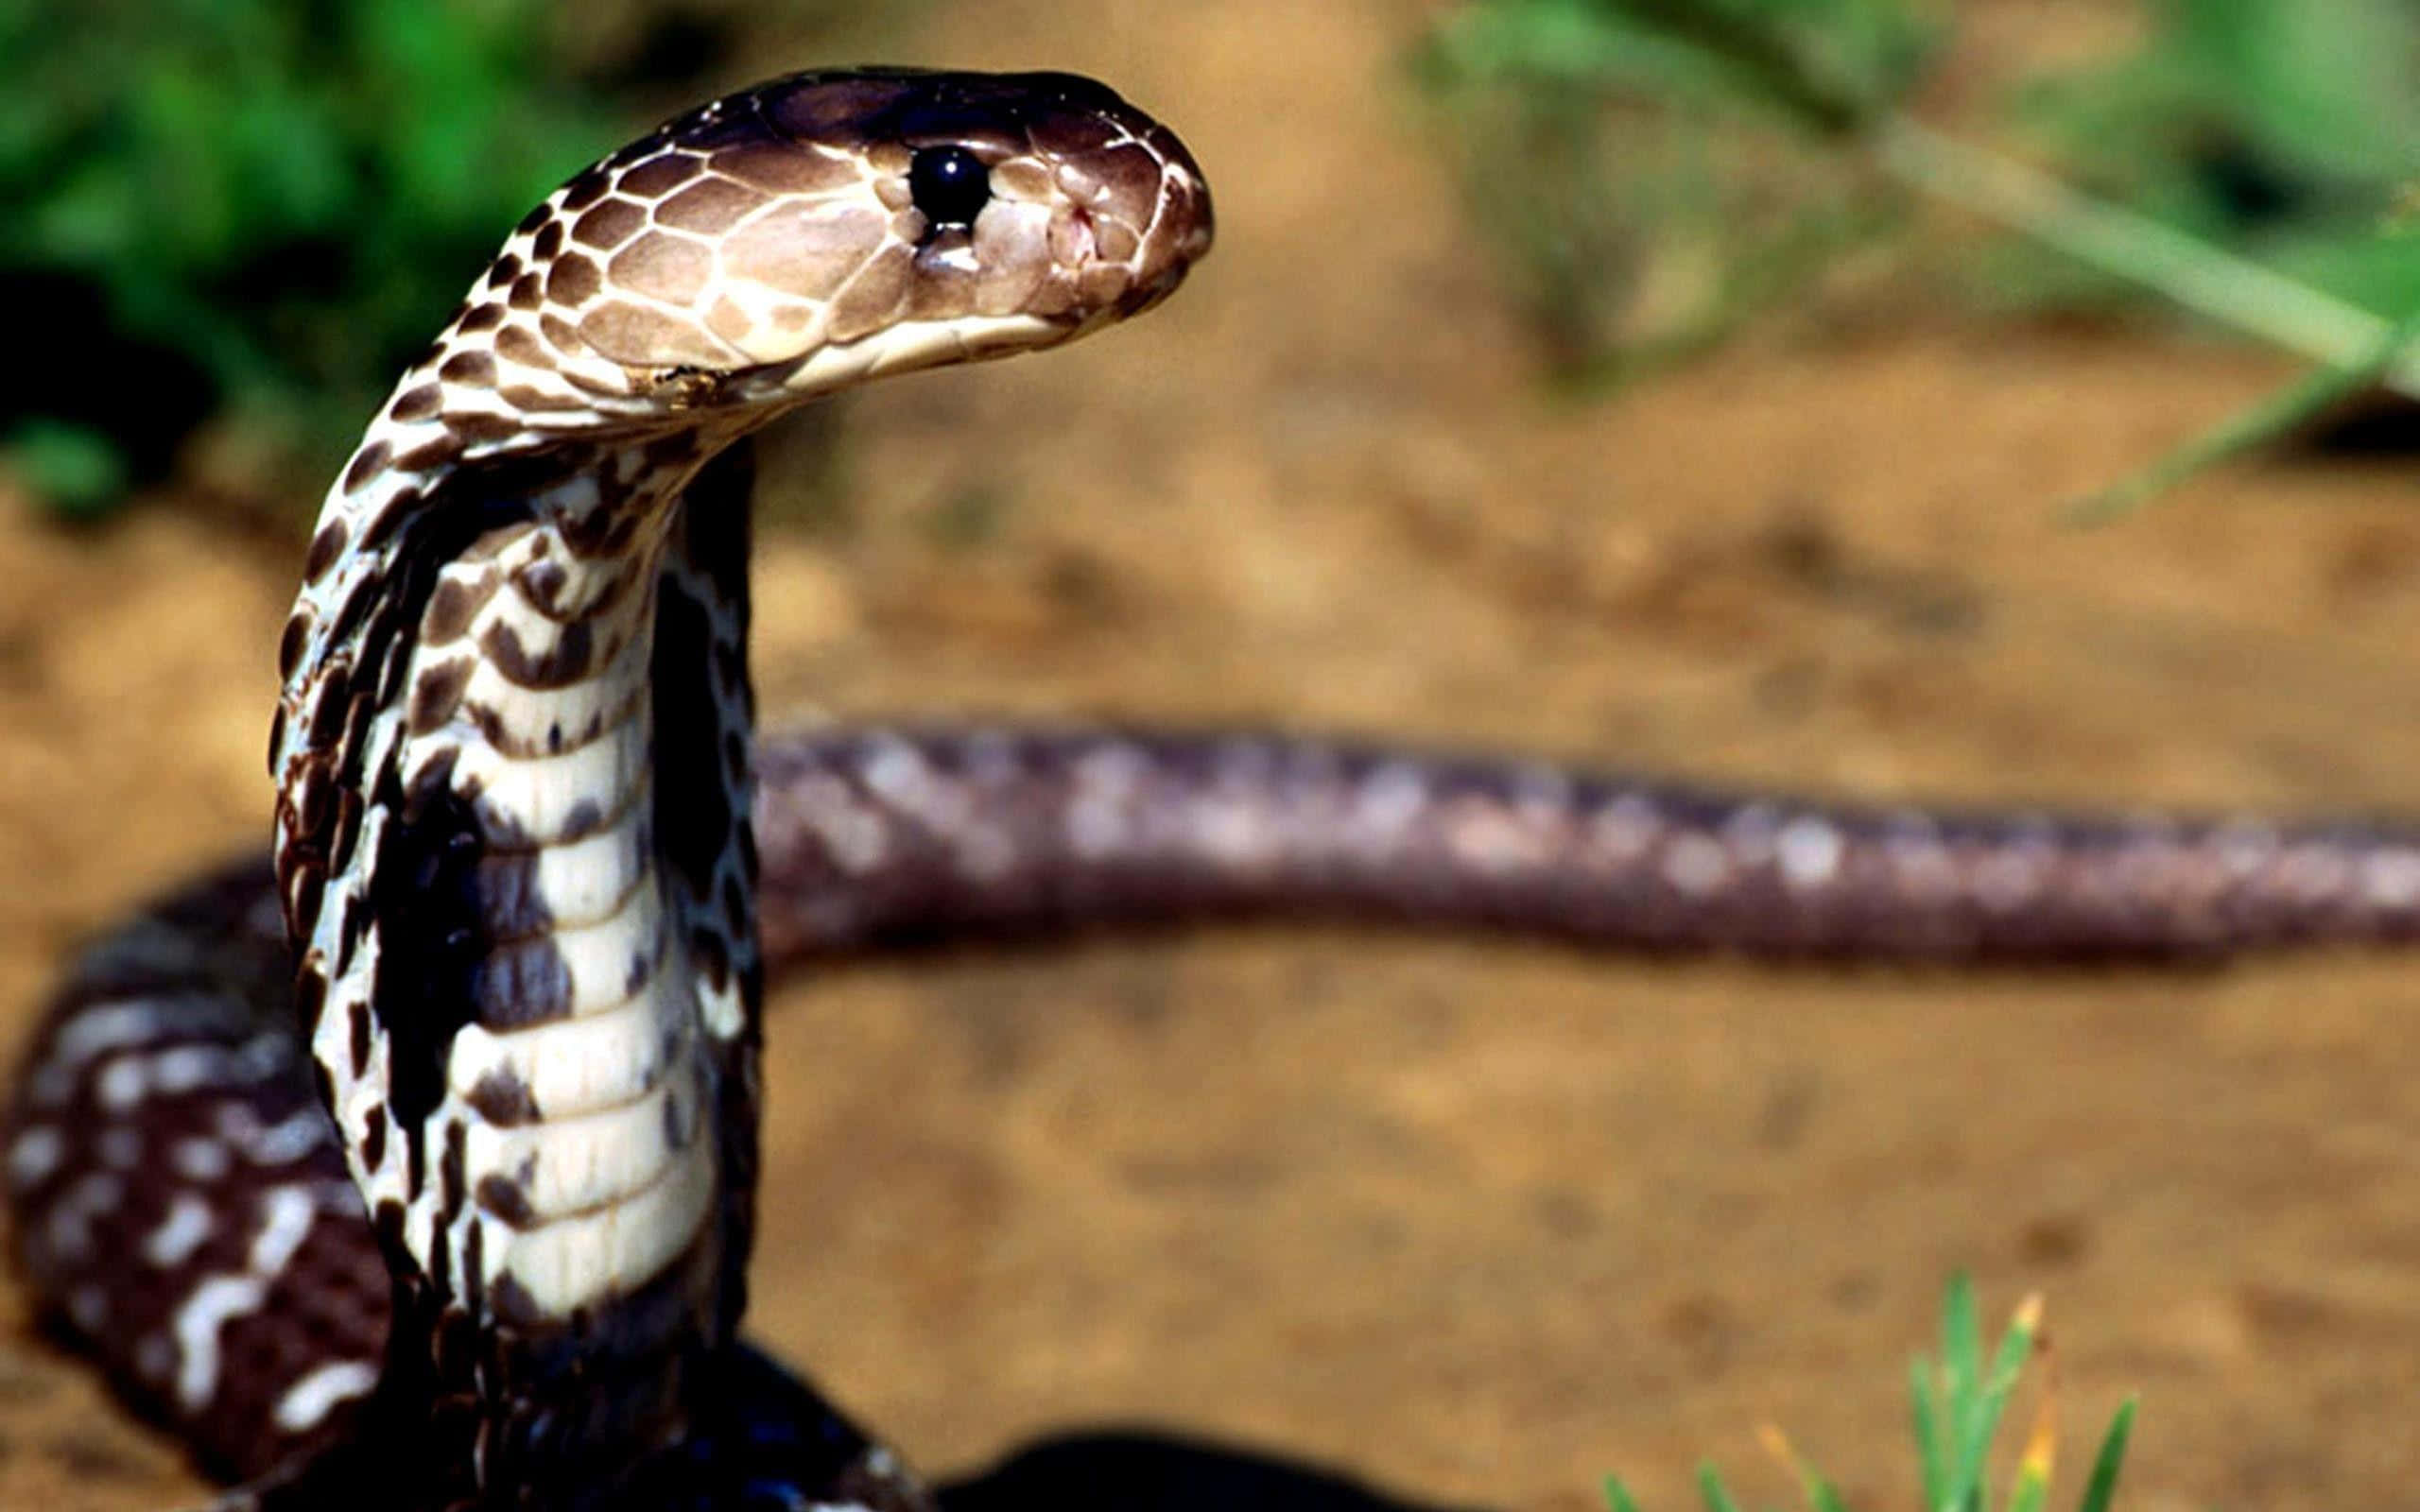 A Close-Up of a Shade of Green-and-Black Cobra Snake